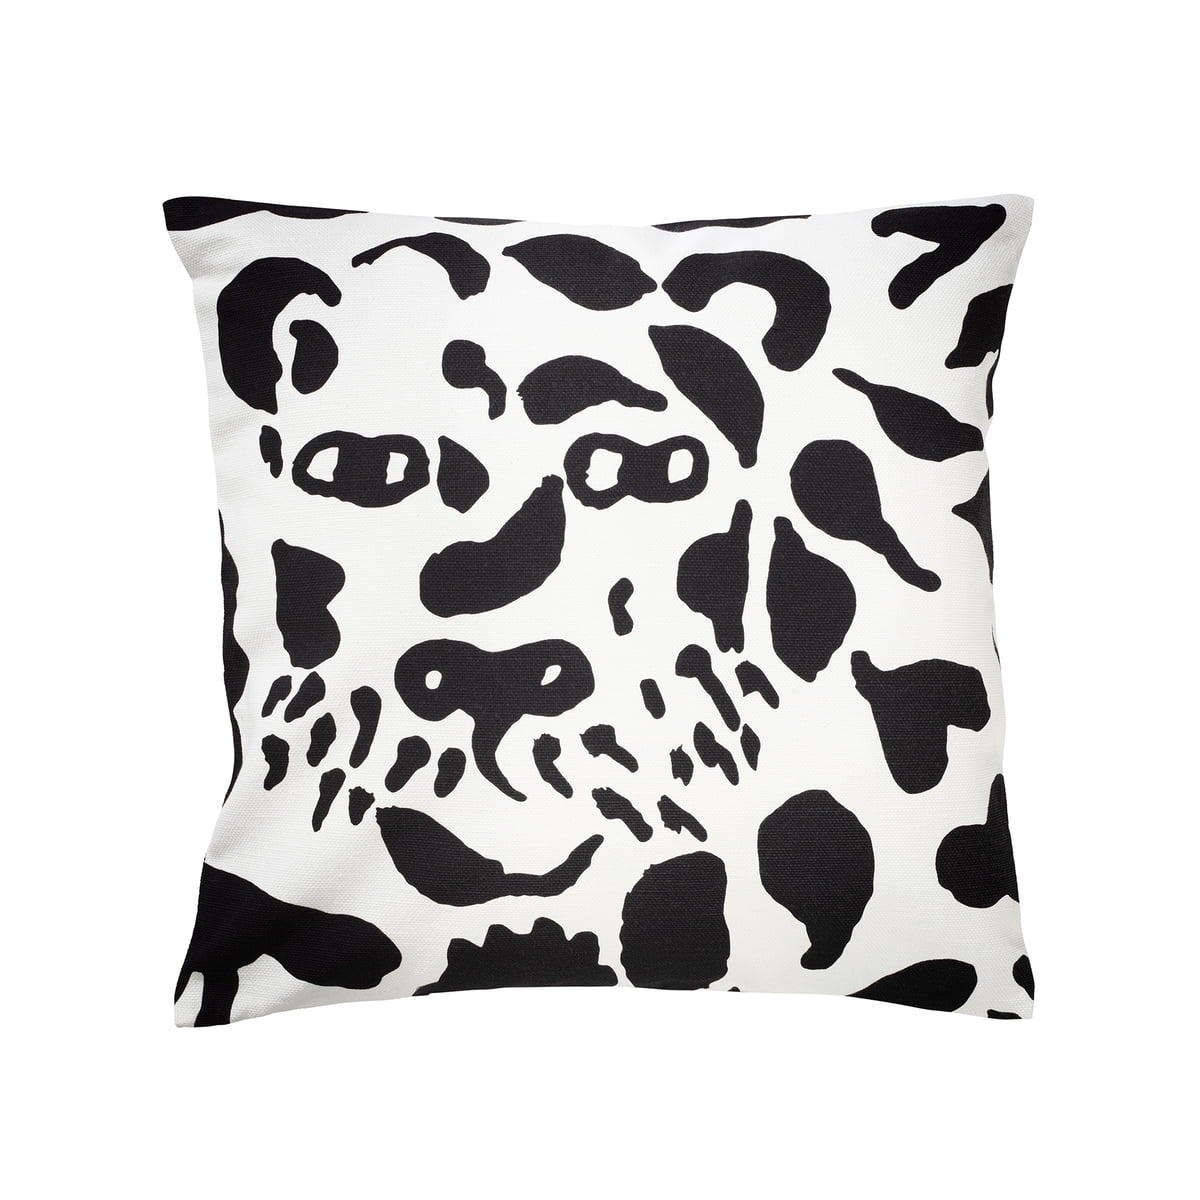 iittala - oiva toikka taie d'oreiller, 47 x 47 cm, cheetah noir / blanc